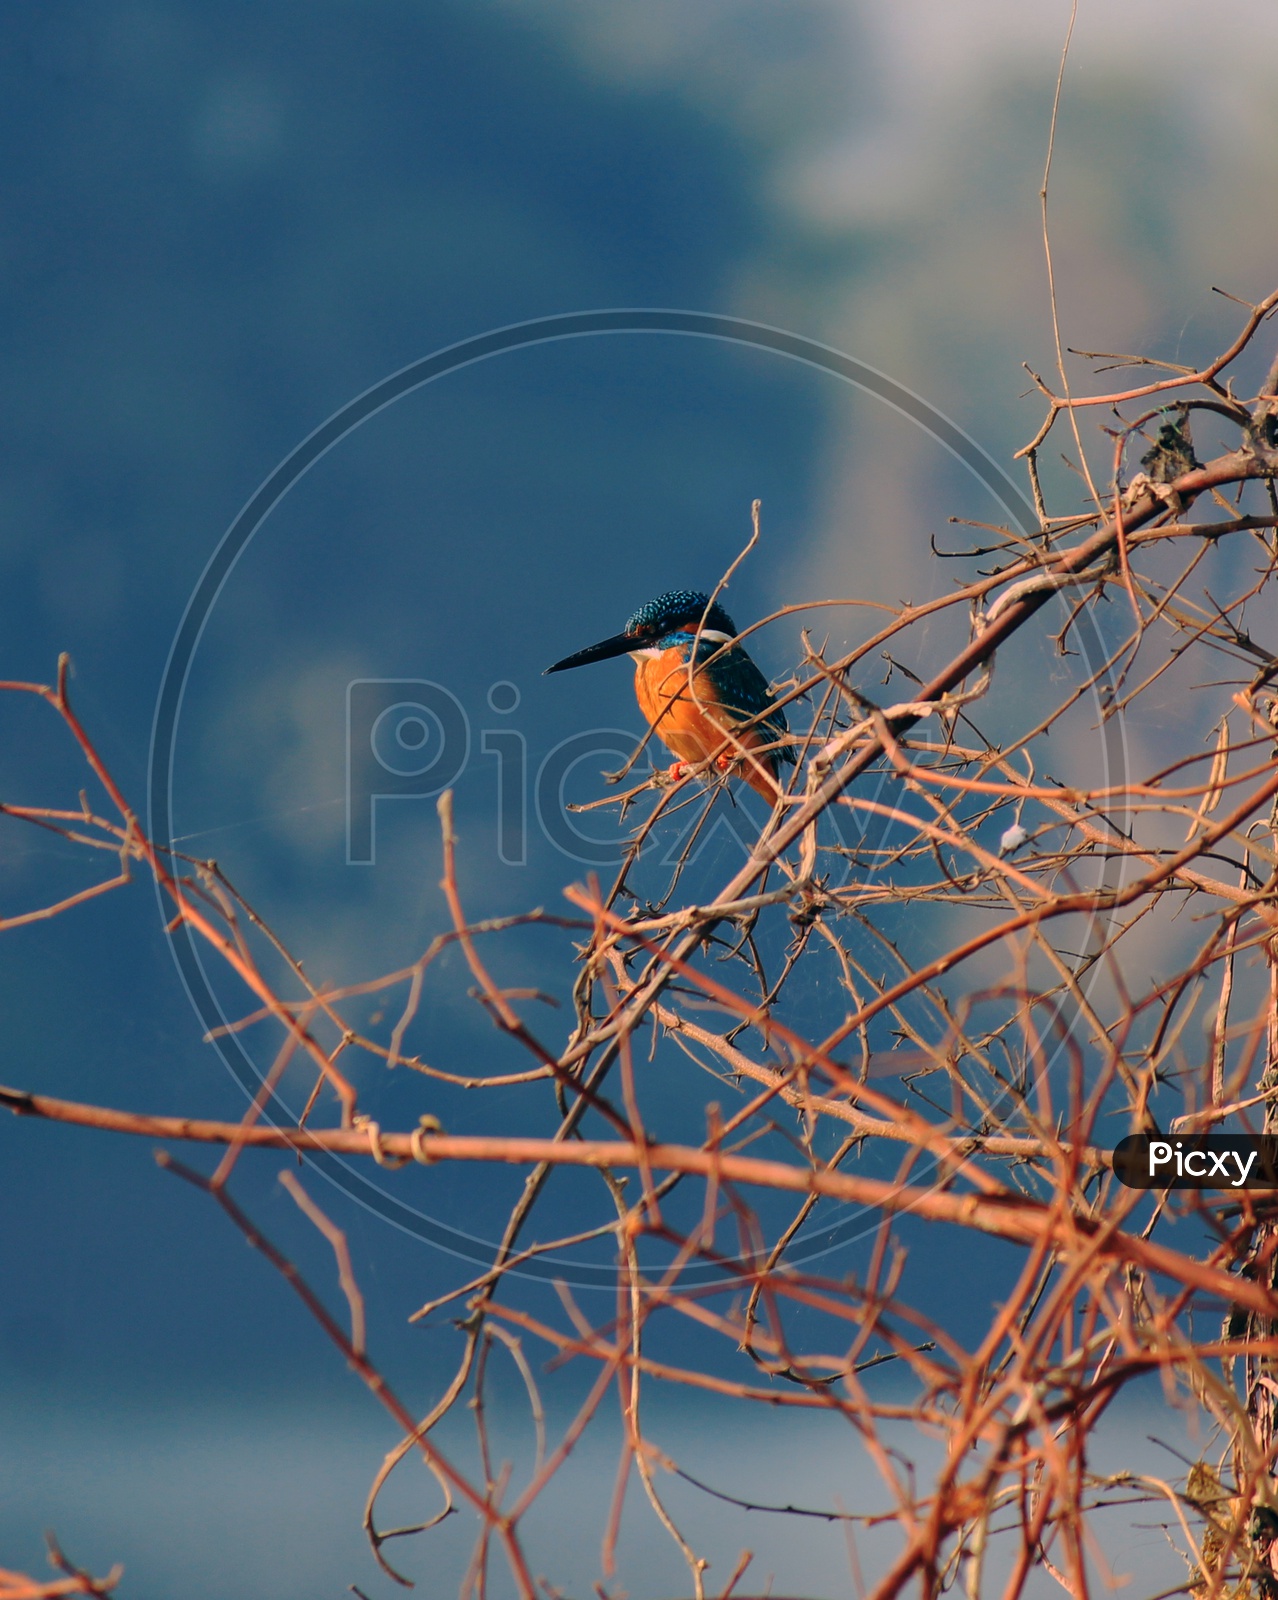 River kingfisher